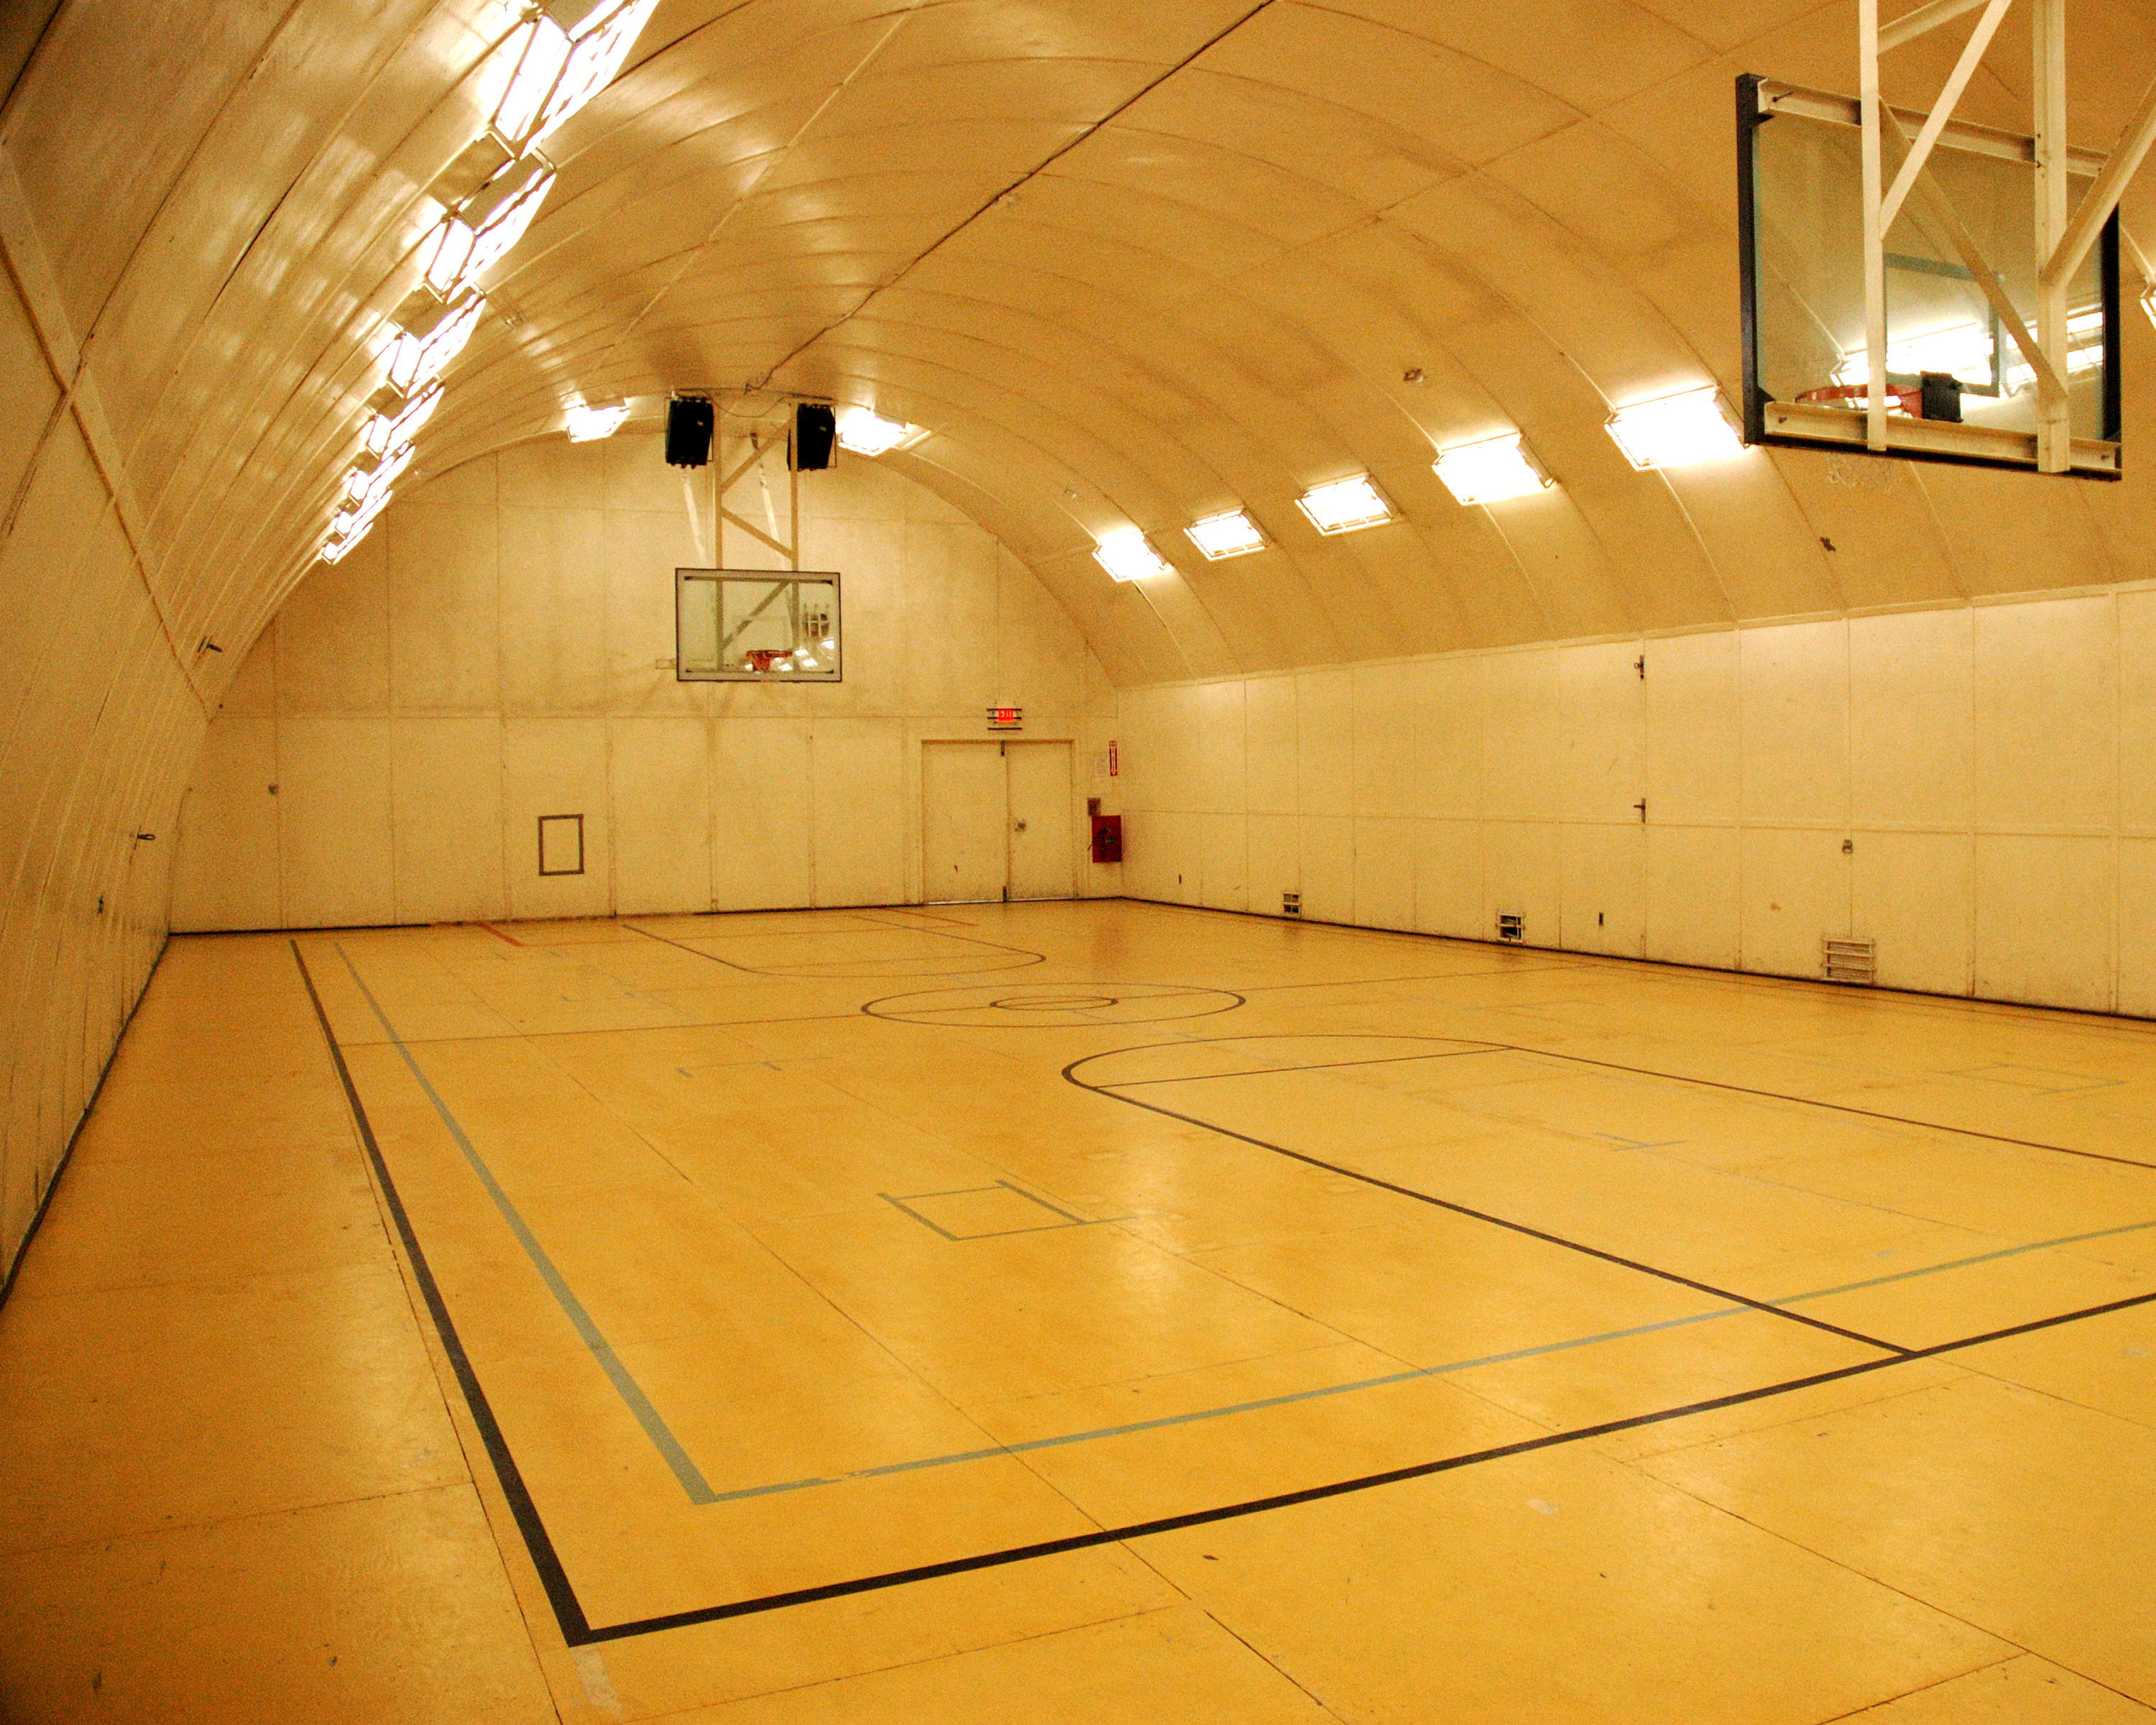 A gymnasium.